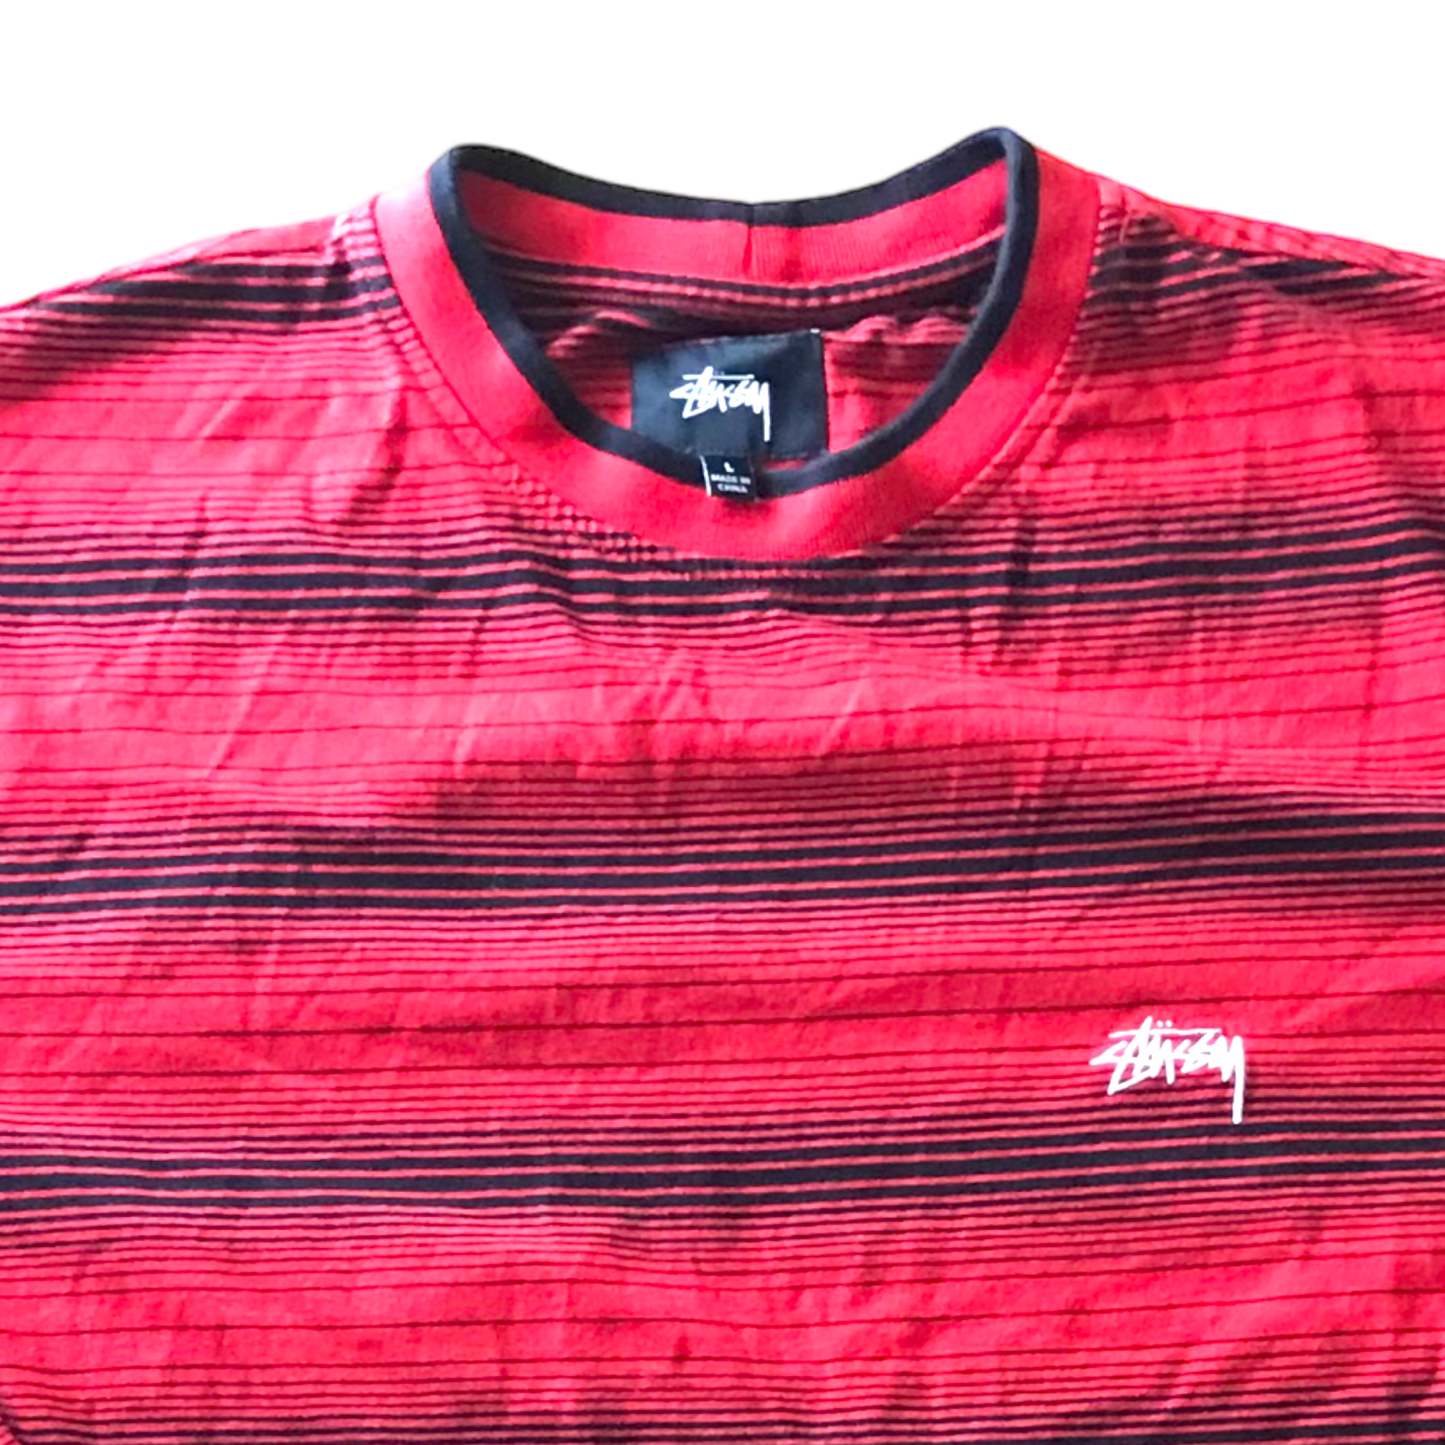 Stussy - Men's Red & Black Striped Longsleeve Shirt